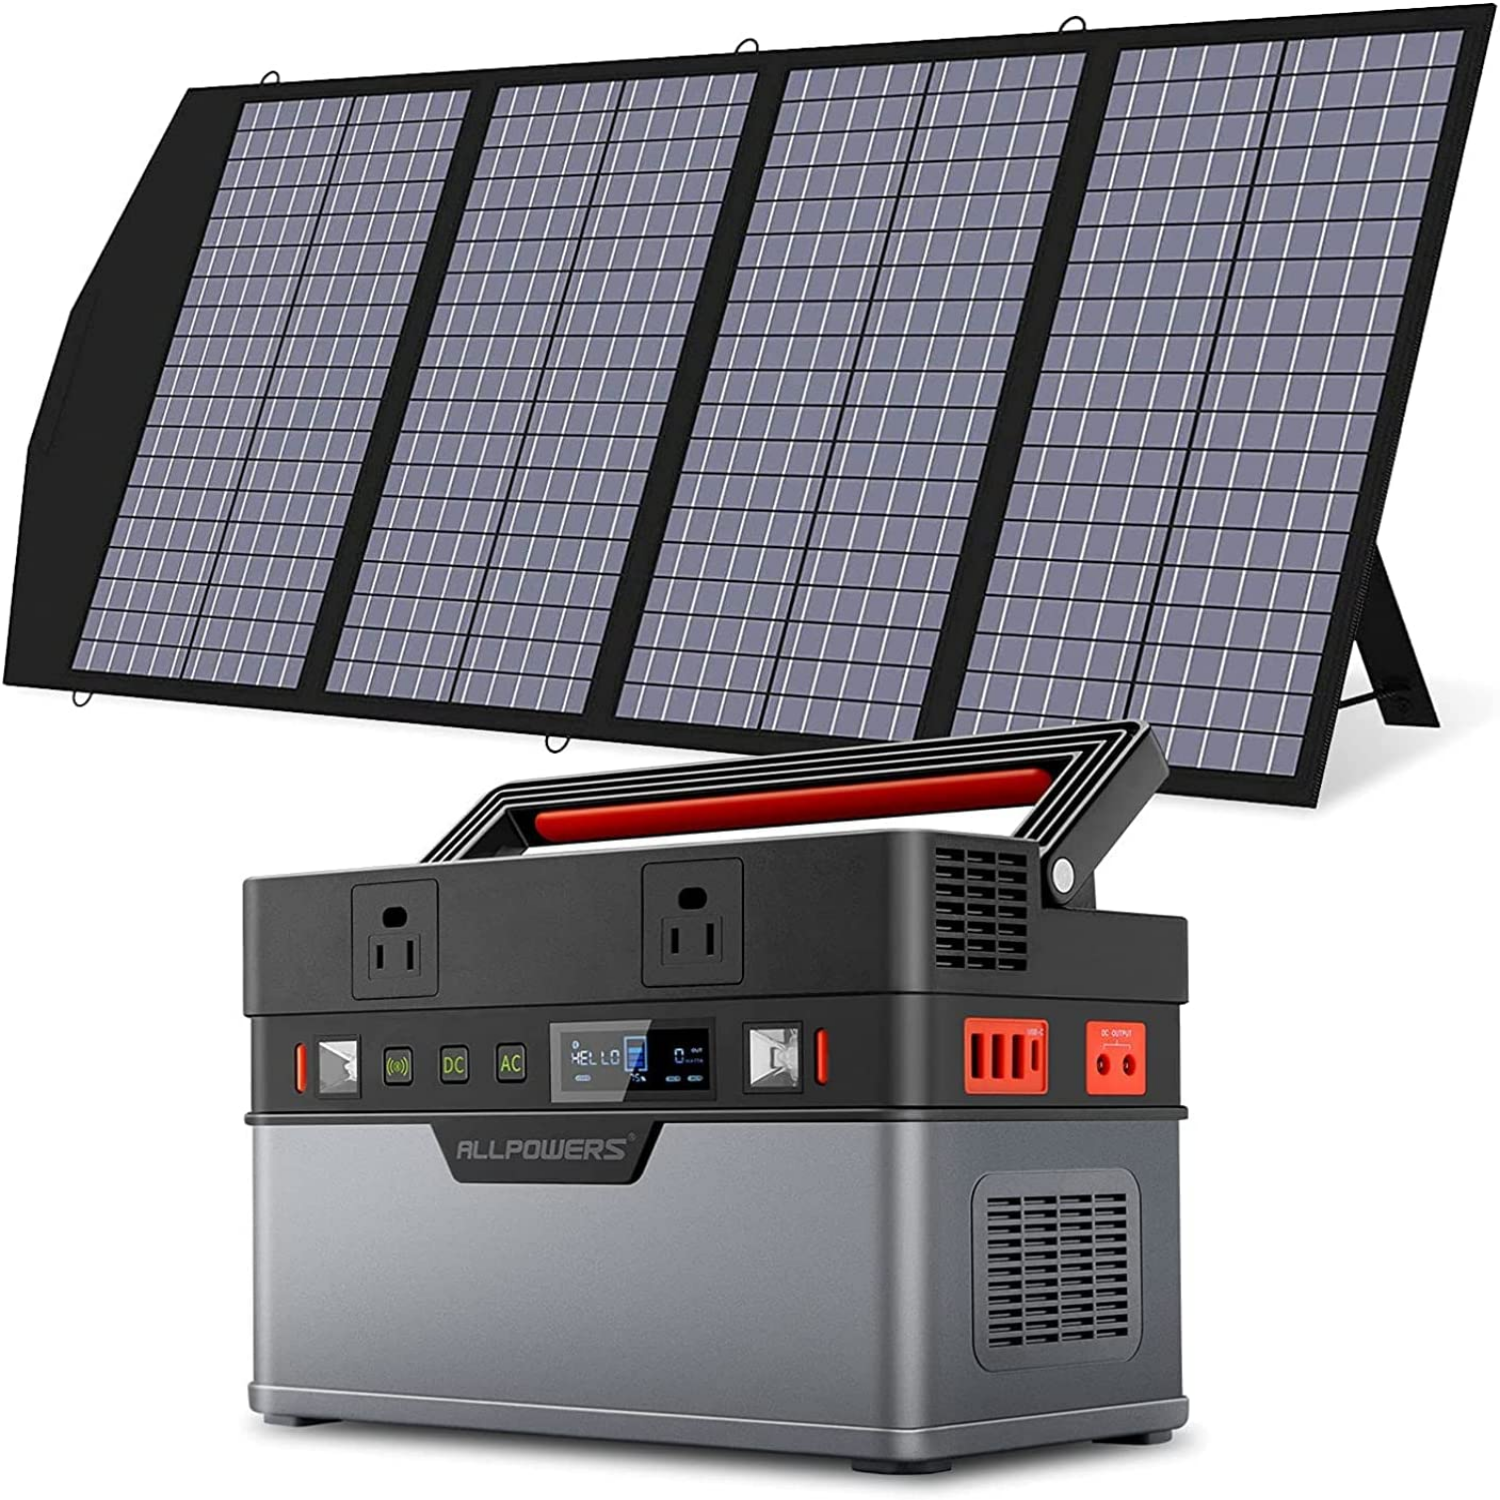 ALLPOWERS Solar Generator Kit 700W (S700 + SP027 100W Solar Panel)